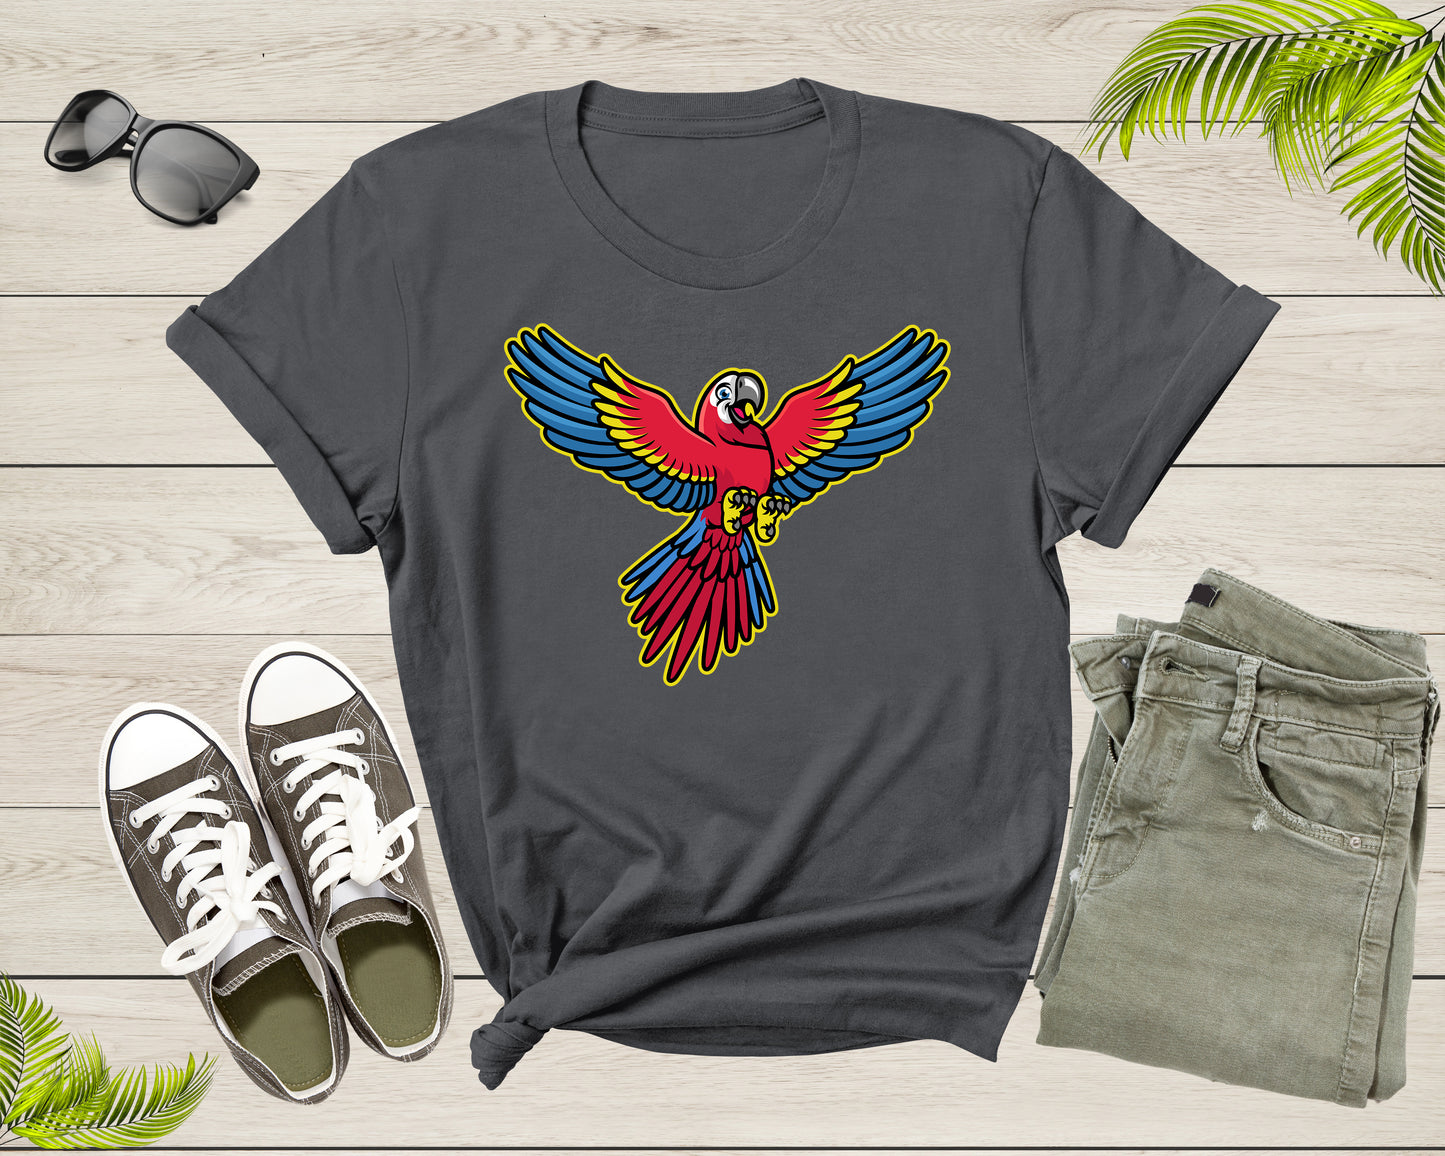 Flying Cute Colorful Parrot Tropic Exotic Bird for Men Women T-Shirt Parrot Lover Gift T Shirt for Men Women Kids Boys Girls Graphic Tshirt